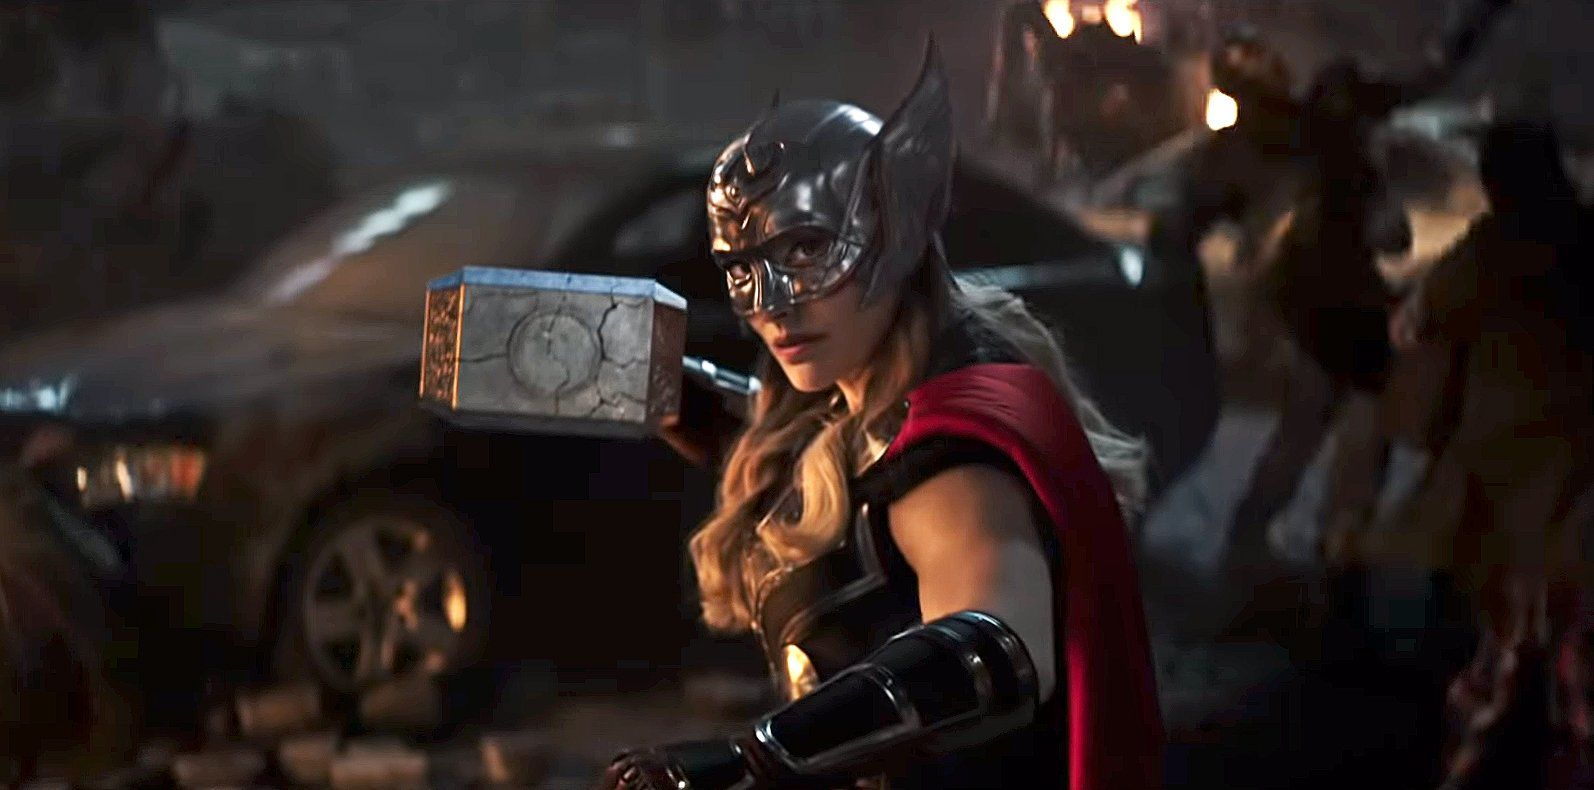 Where were the scenes from Thor Ragnarok shot?